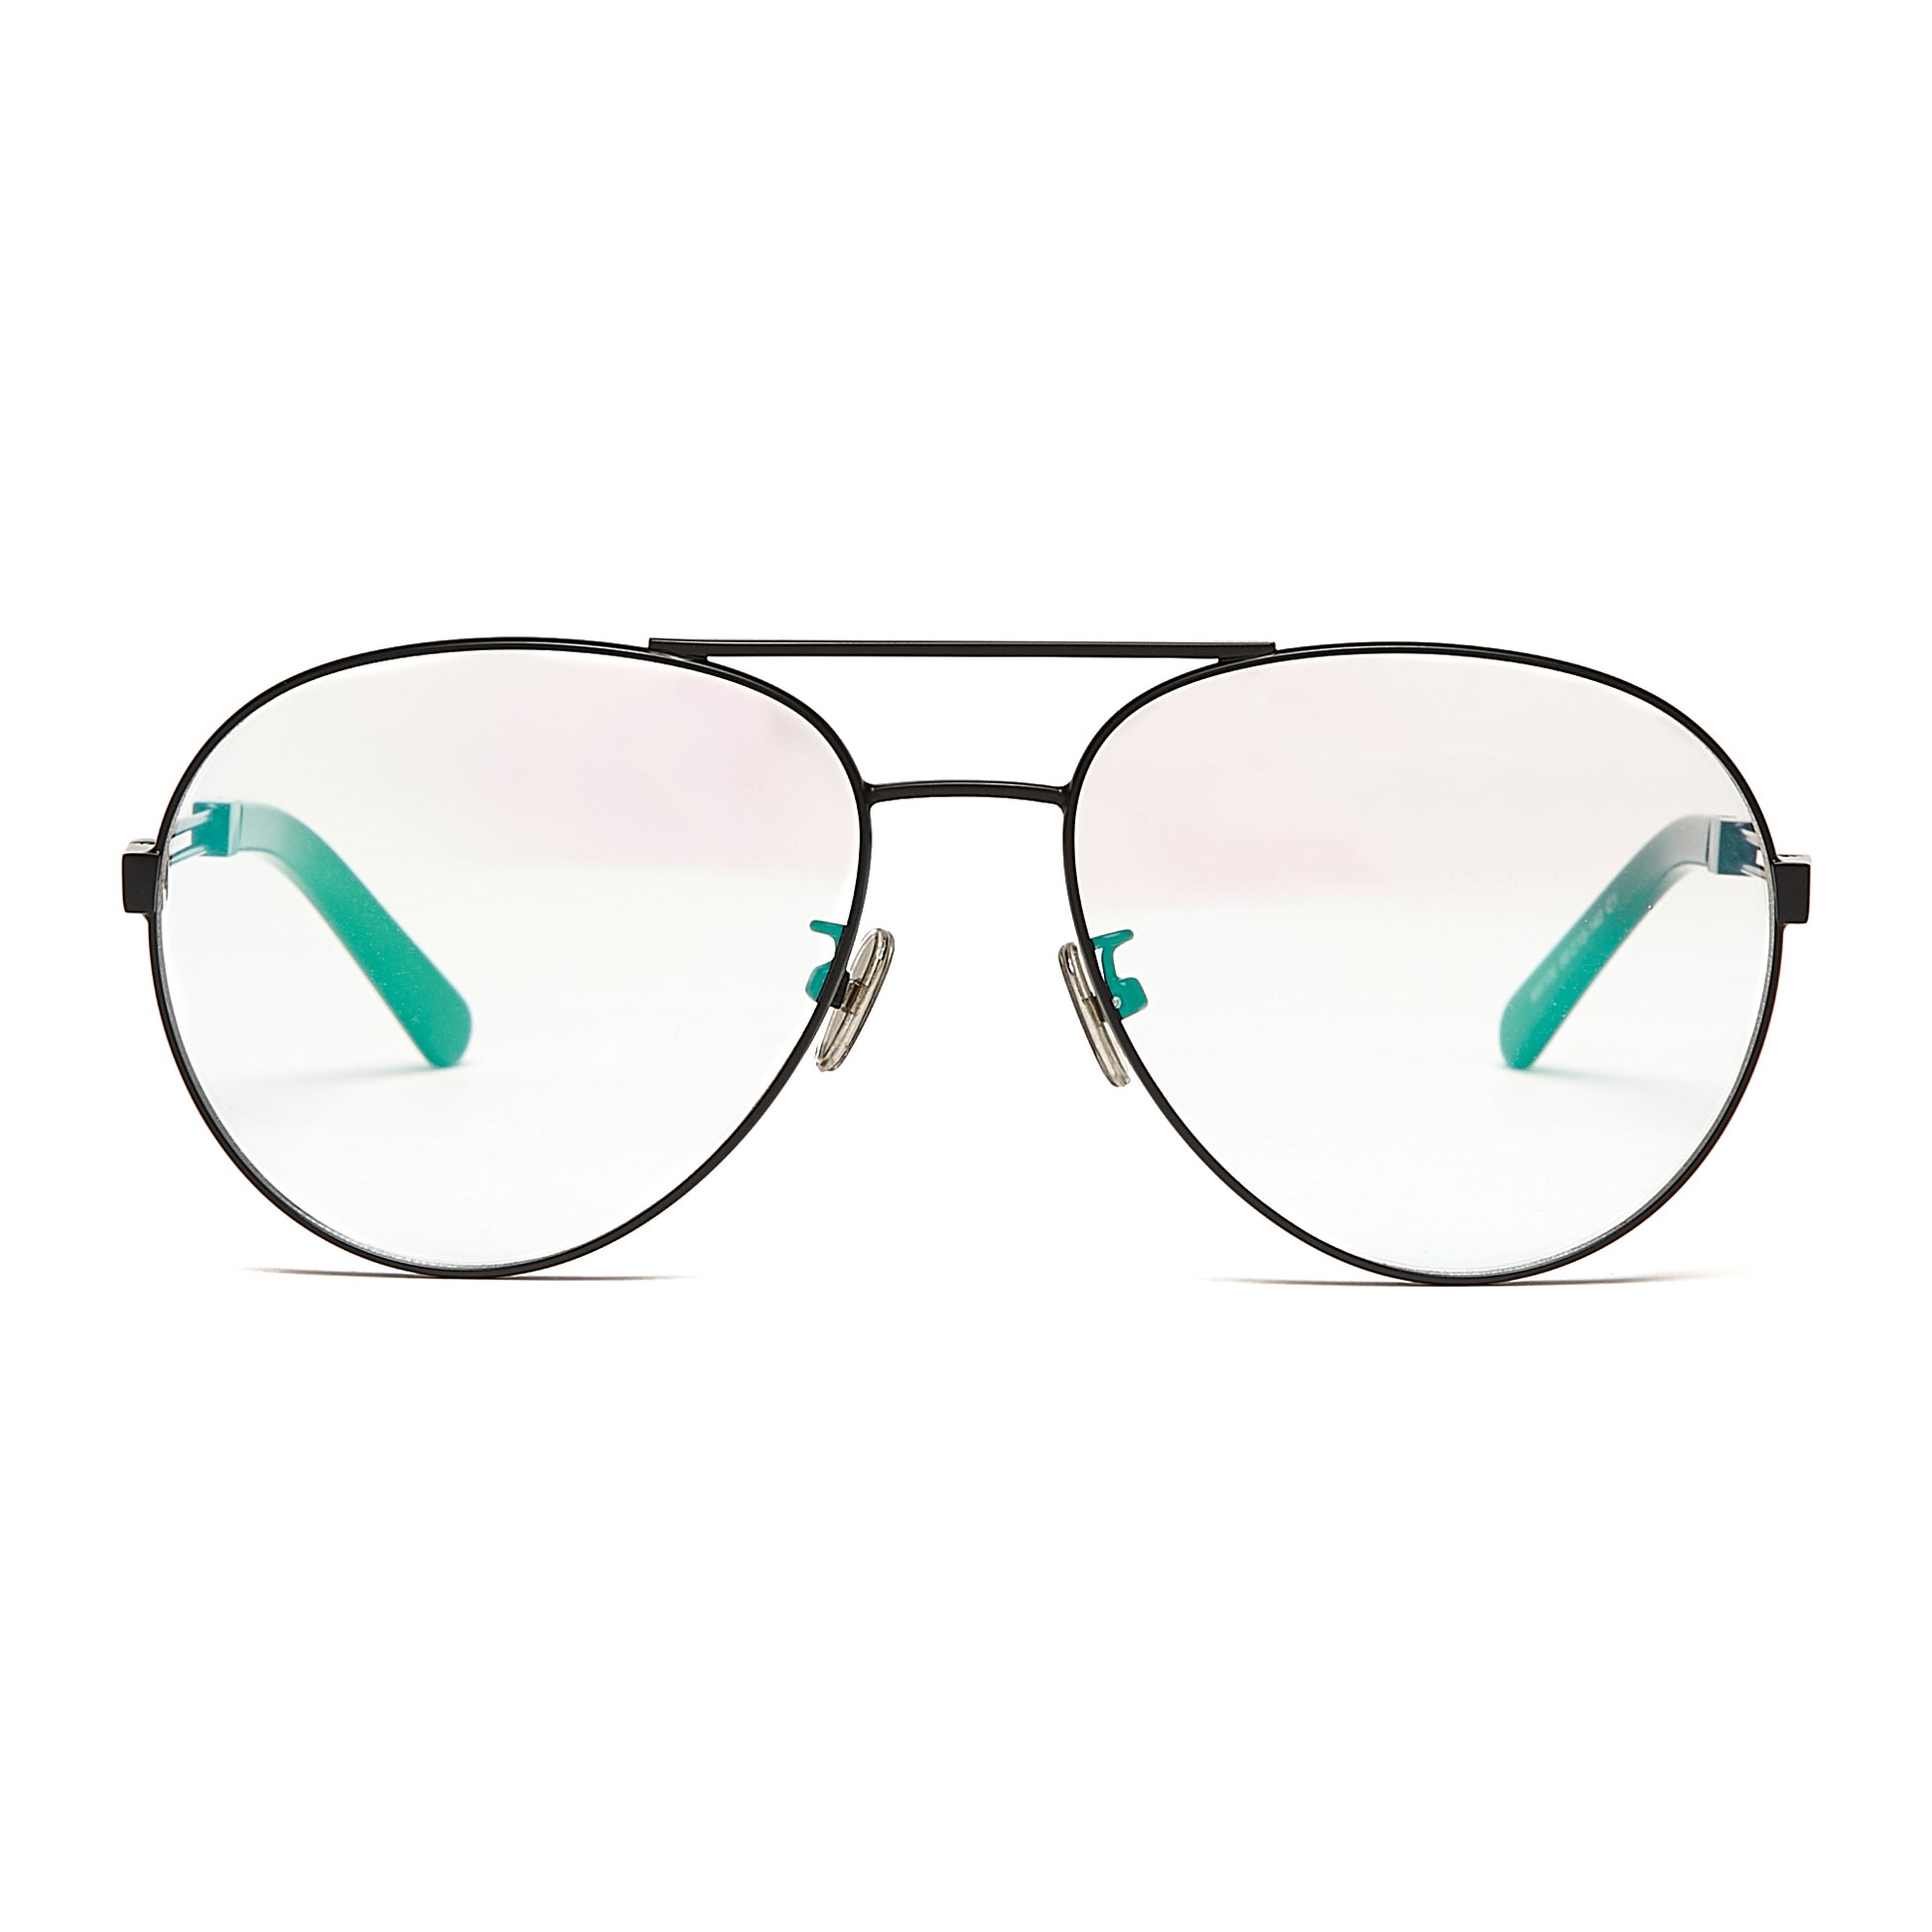 BILLY (Size 53) Unisex Anti-Glare Pilot Aviator Eyeglasses - IDENTITY Apparel Shop